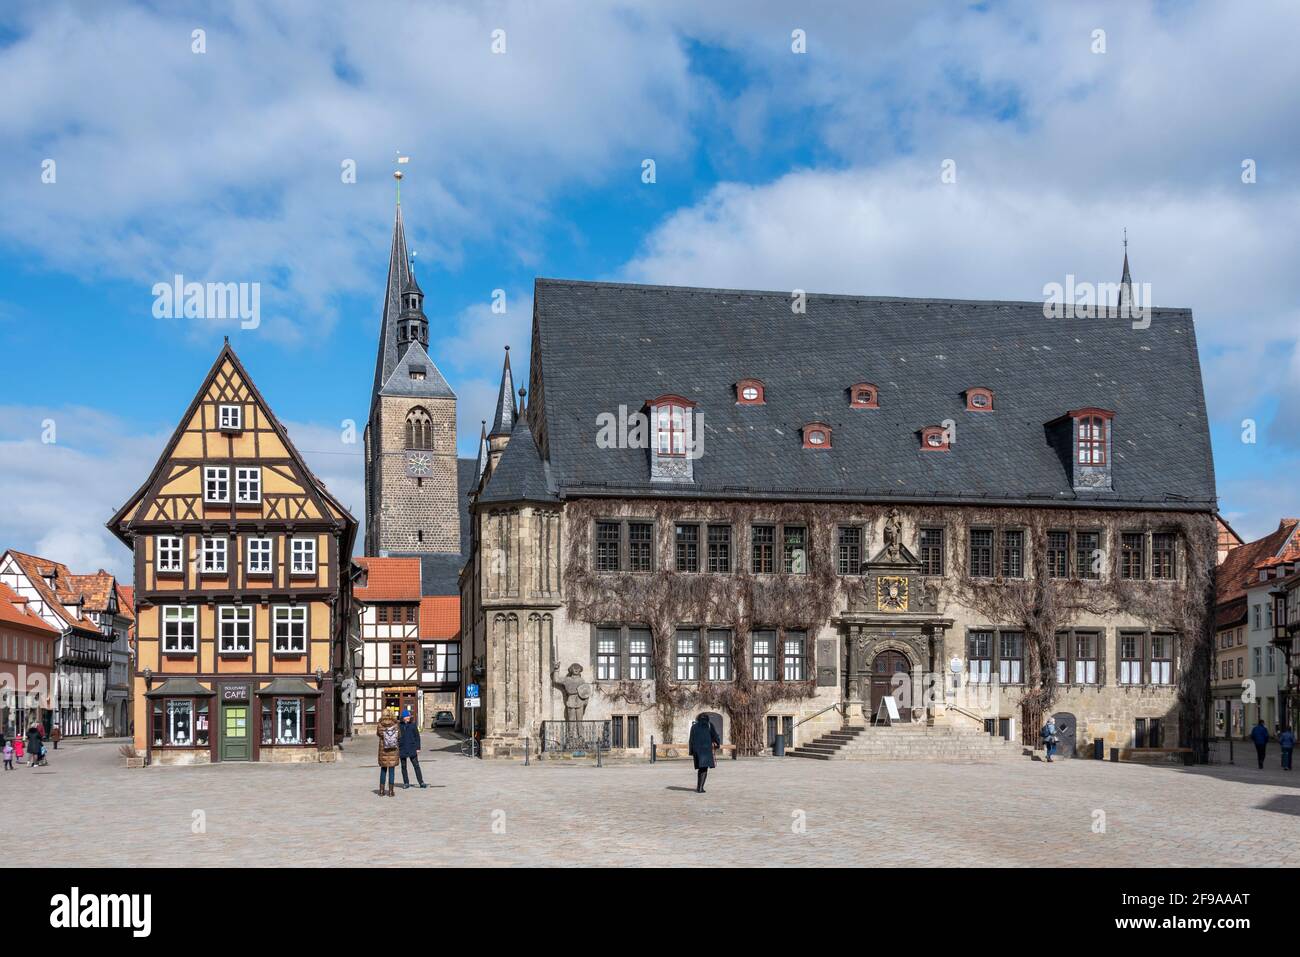 Germany, Saxony-Anhalt, Quedlinburg, historic half-timbered house, market church and town hall, World Heritage City of Quedlinburg. Stock Photo